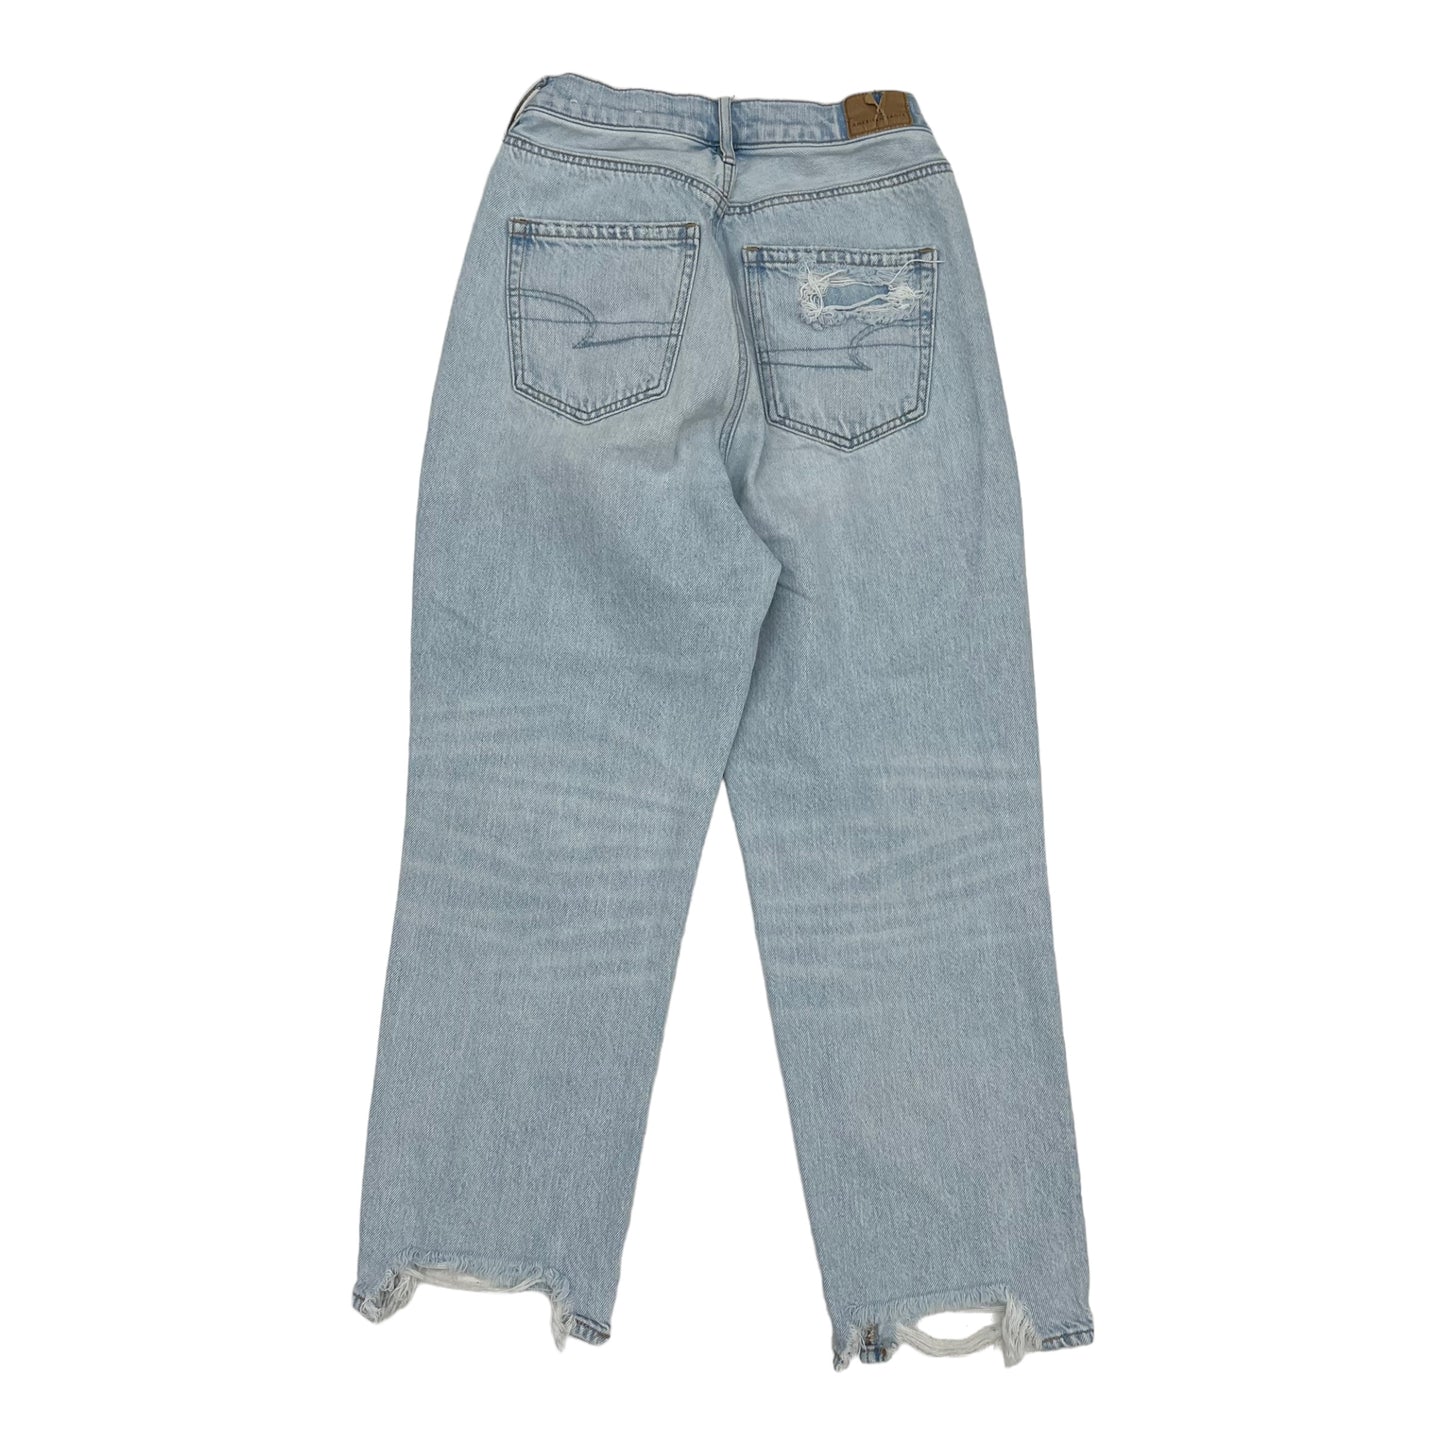 Jeans Boyfriend By American Eagle  Size: 4petite